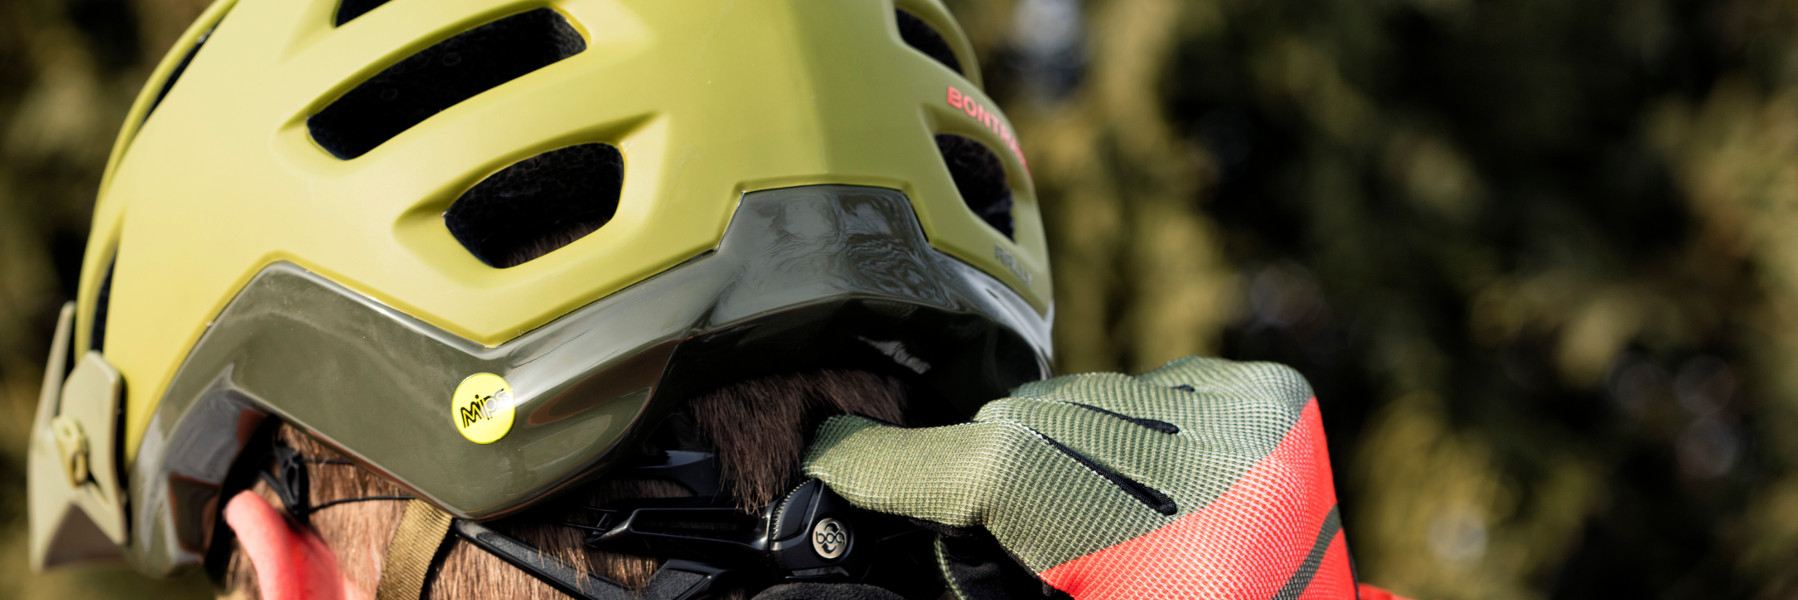 Canadas Best Online Bike Shop Helmets